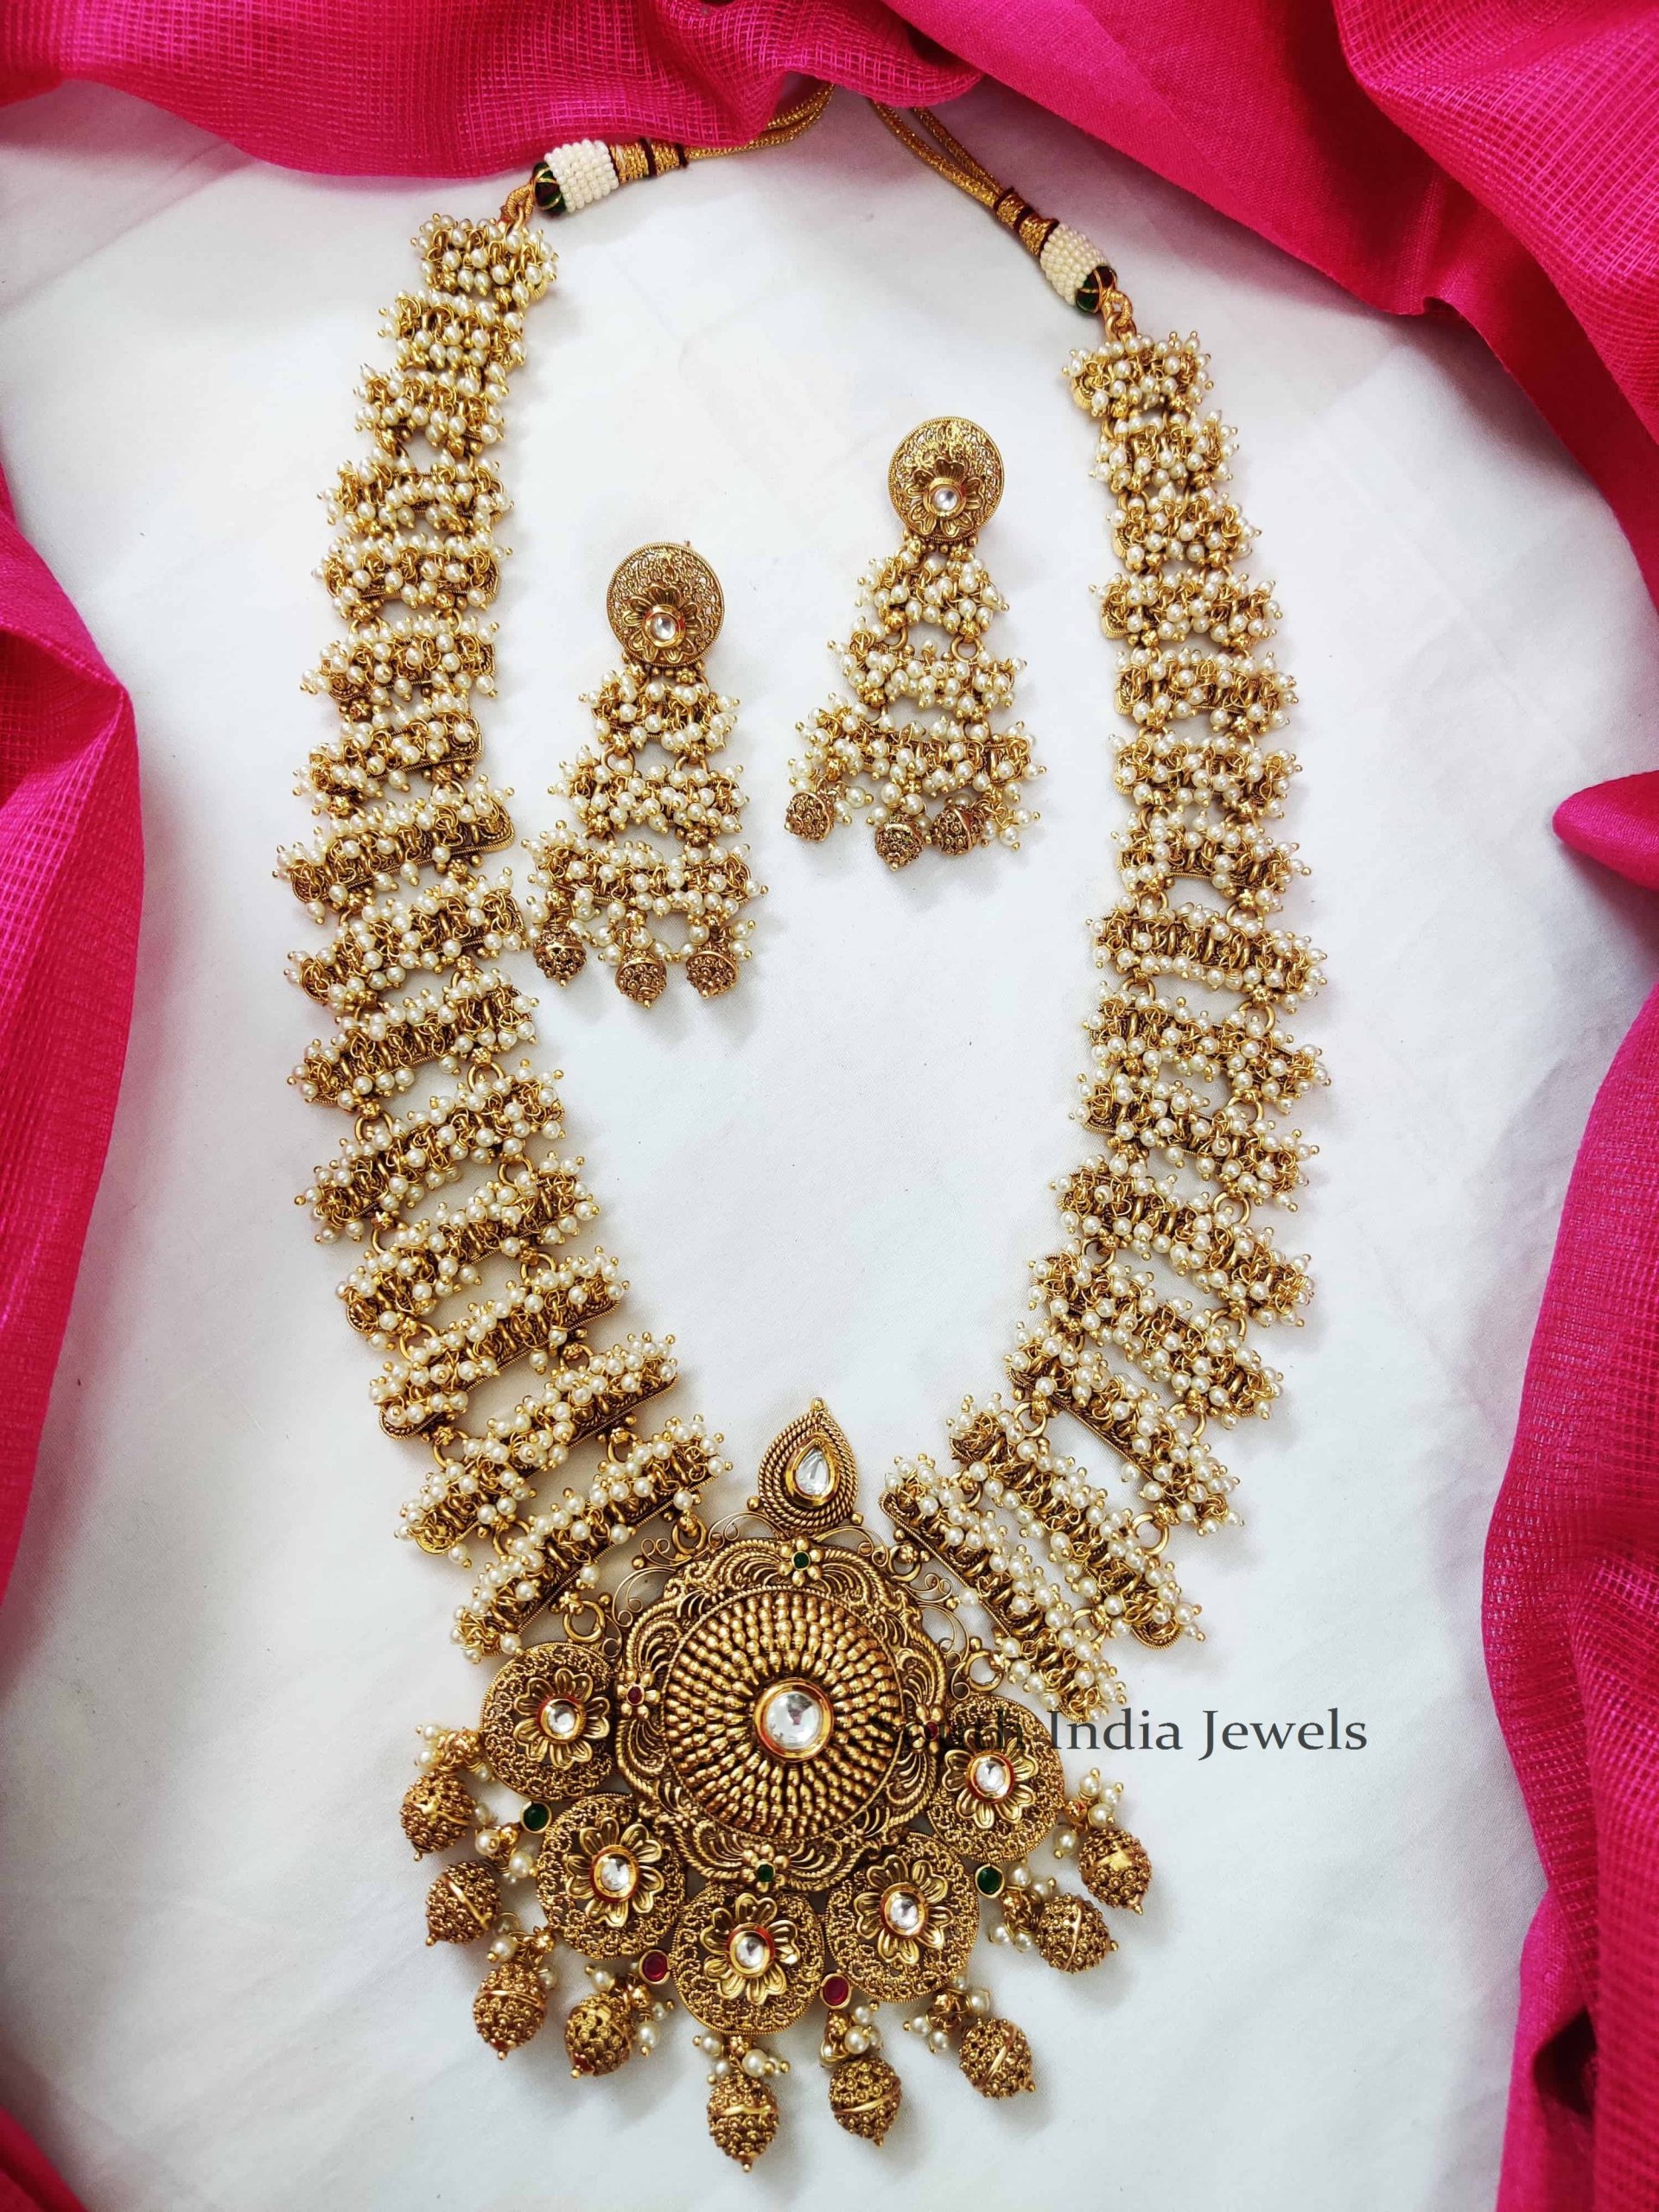 Buy Pearl / Mutyala Haram Online - South India Jewels